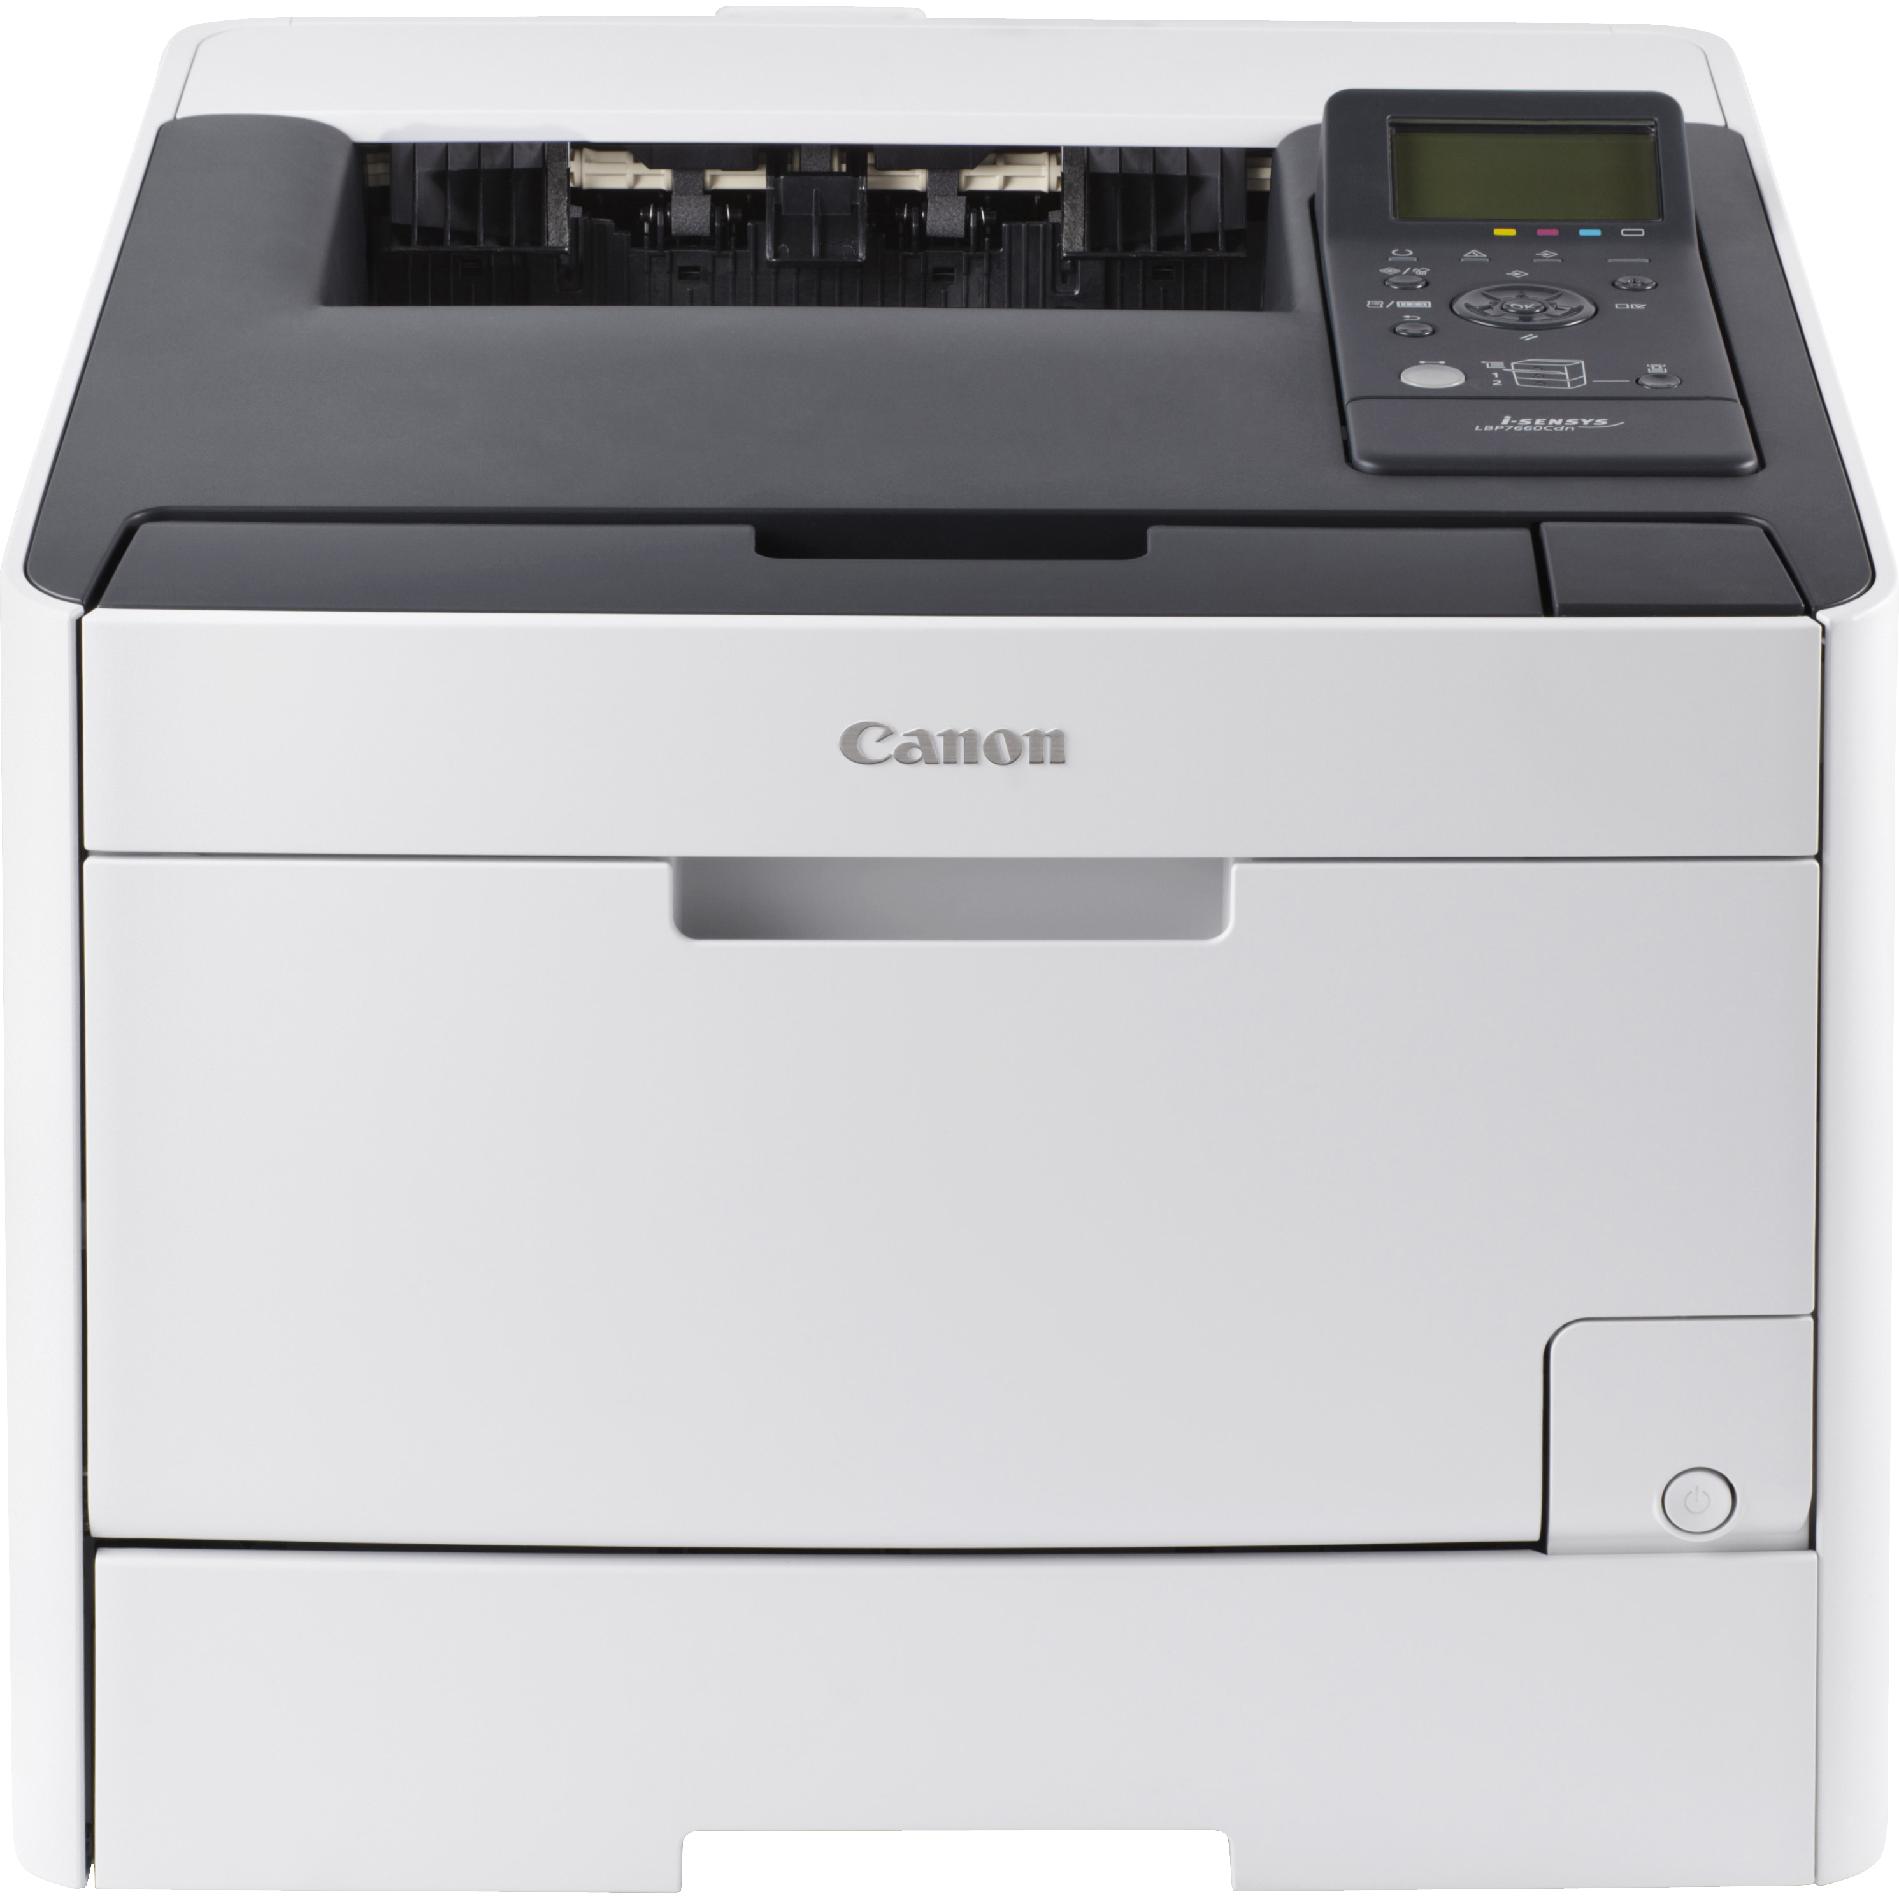 Canon LBP-7660 imageCLASS Color Laser Printer